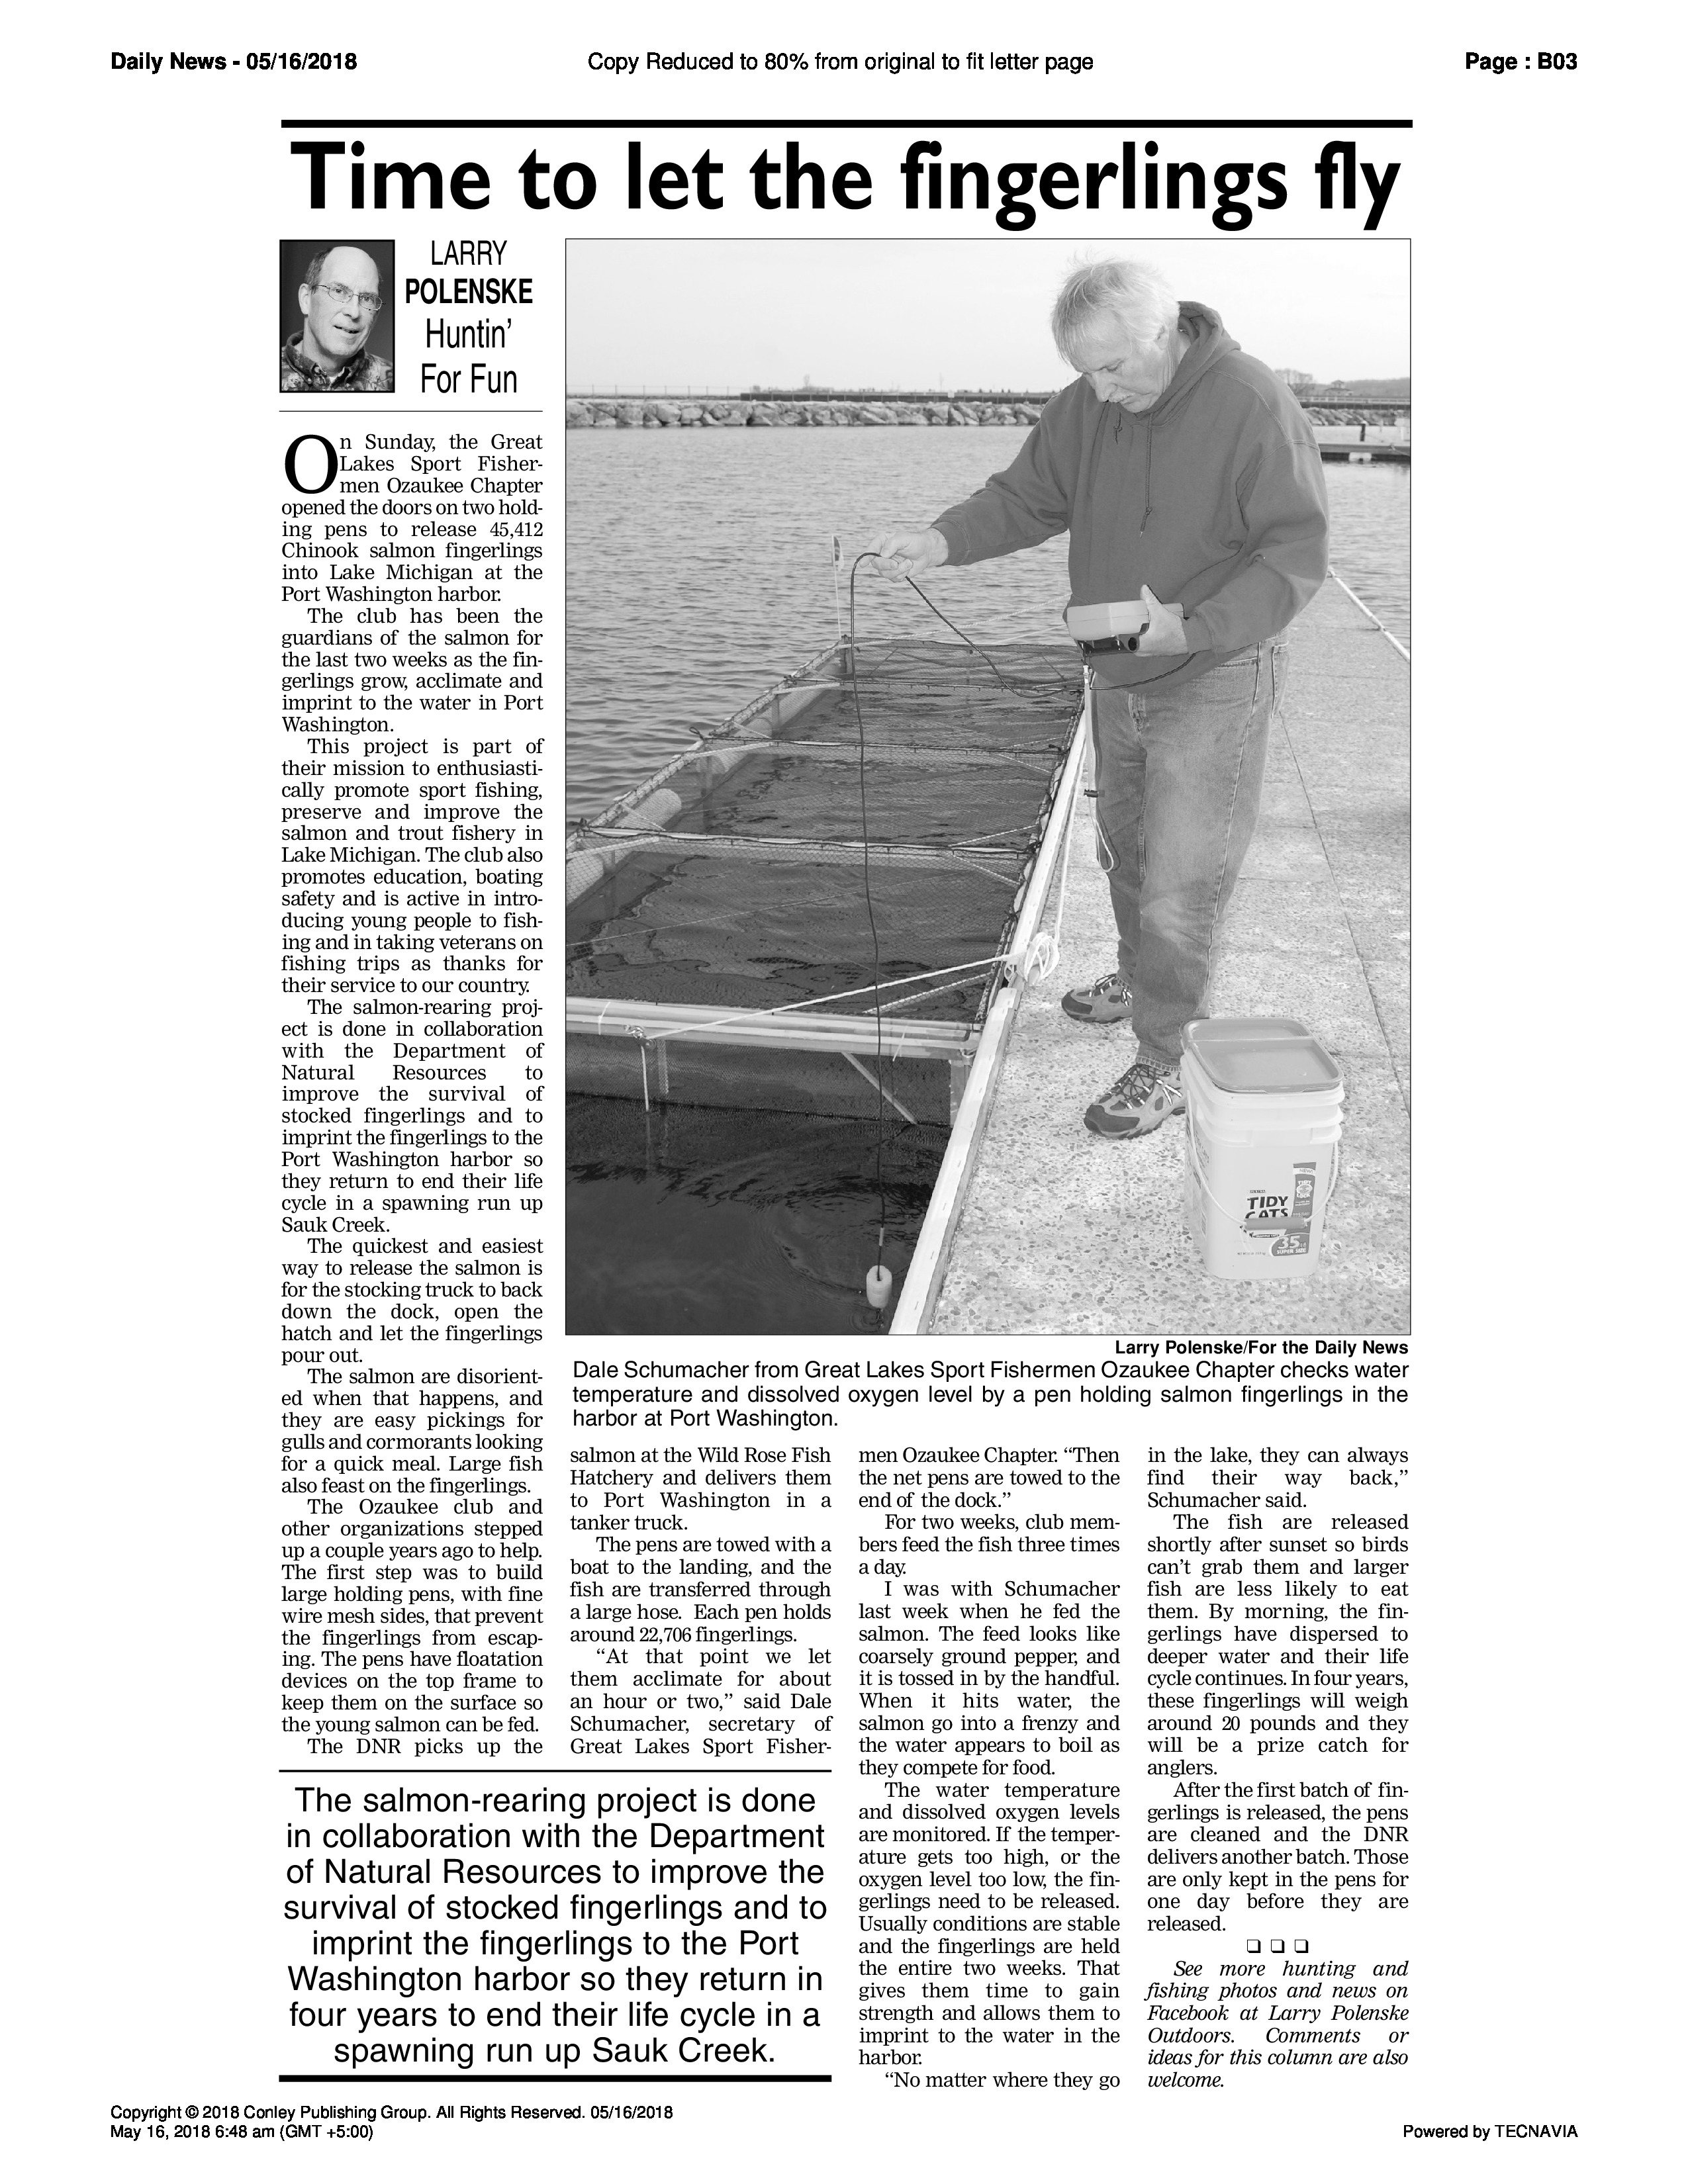 Updates for Net Pen Project – Great Lakes Sport Fishermen – Ozaukee Chapter